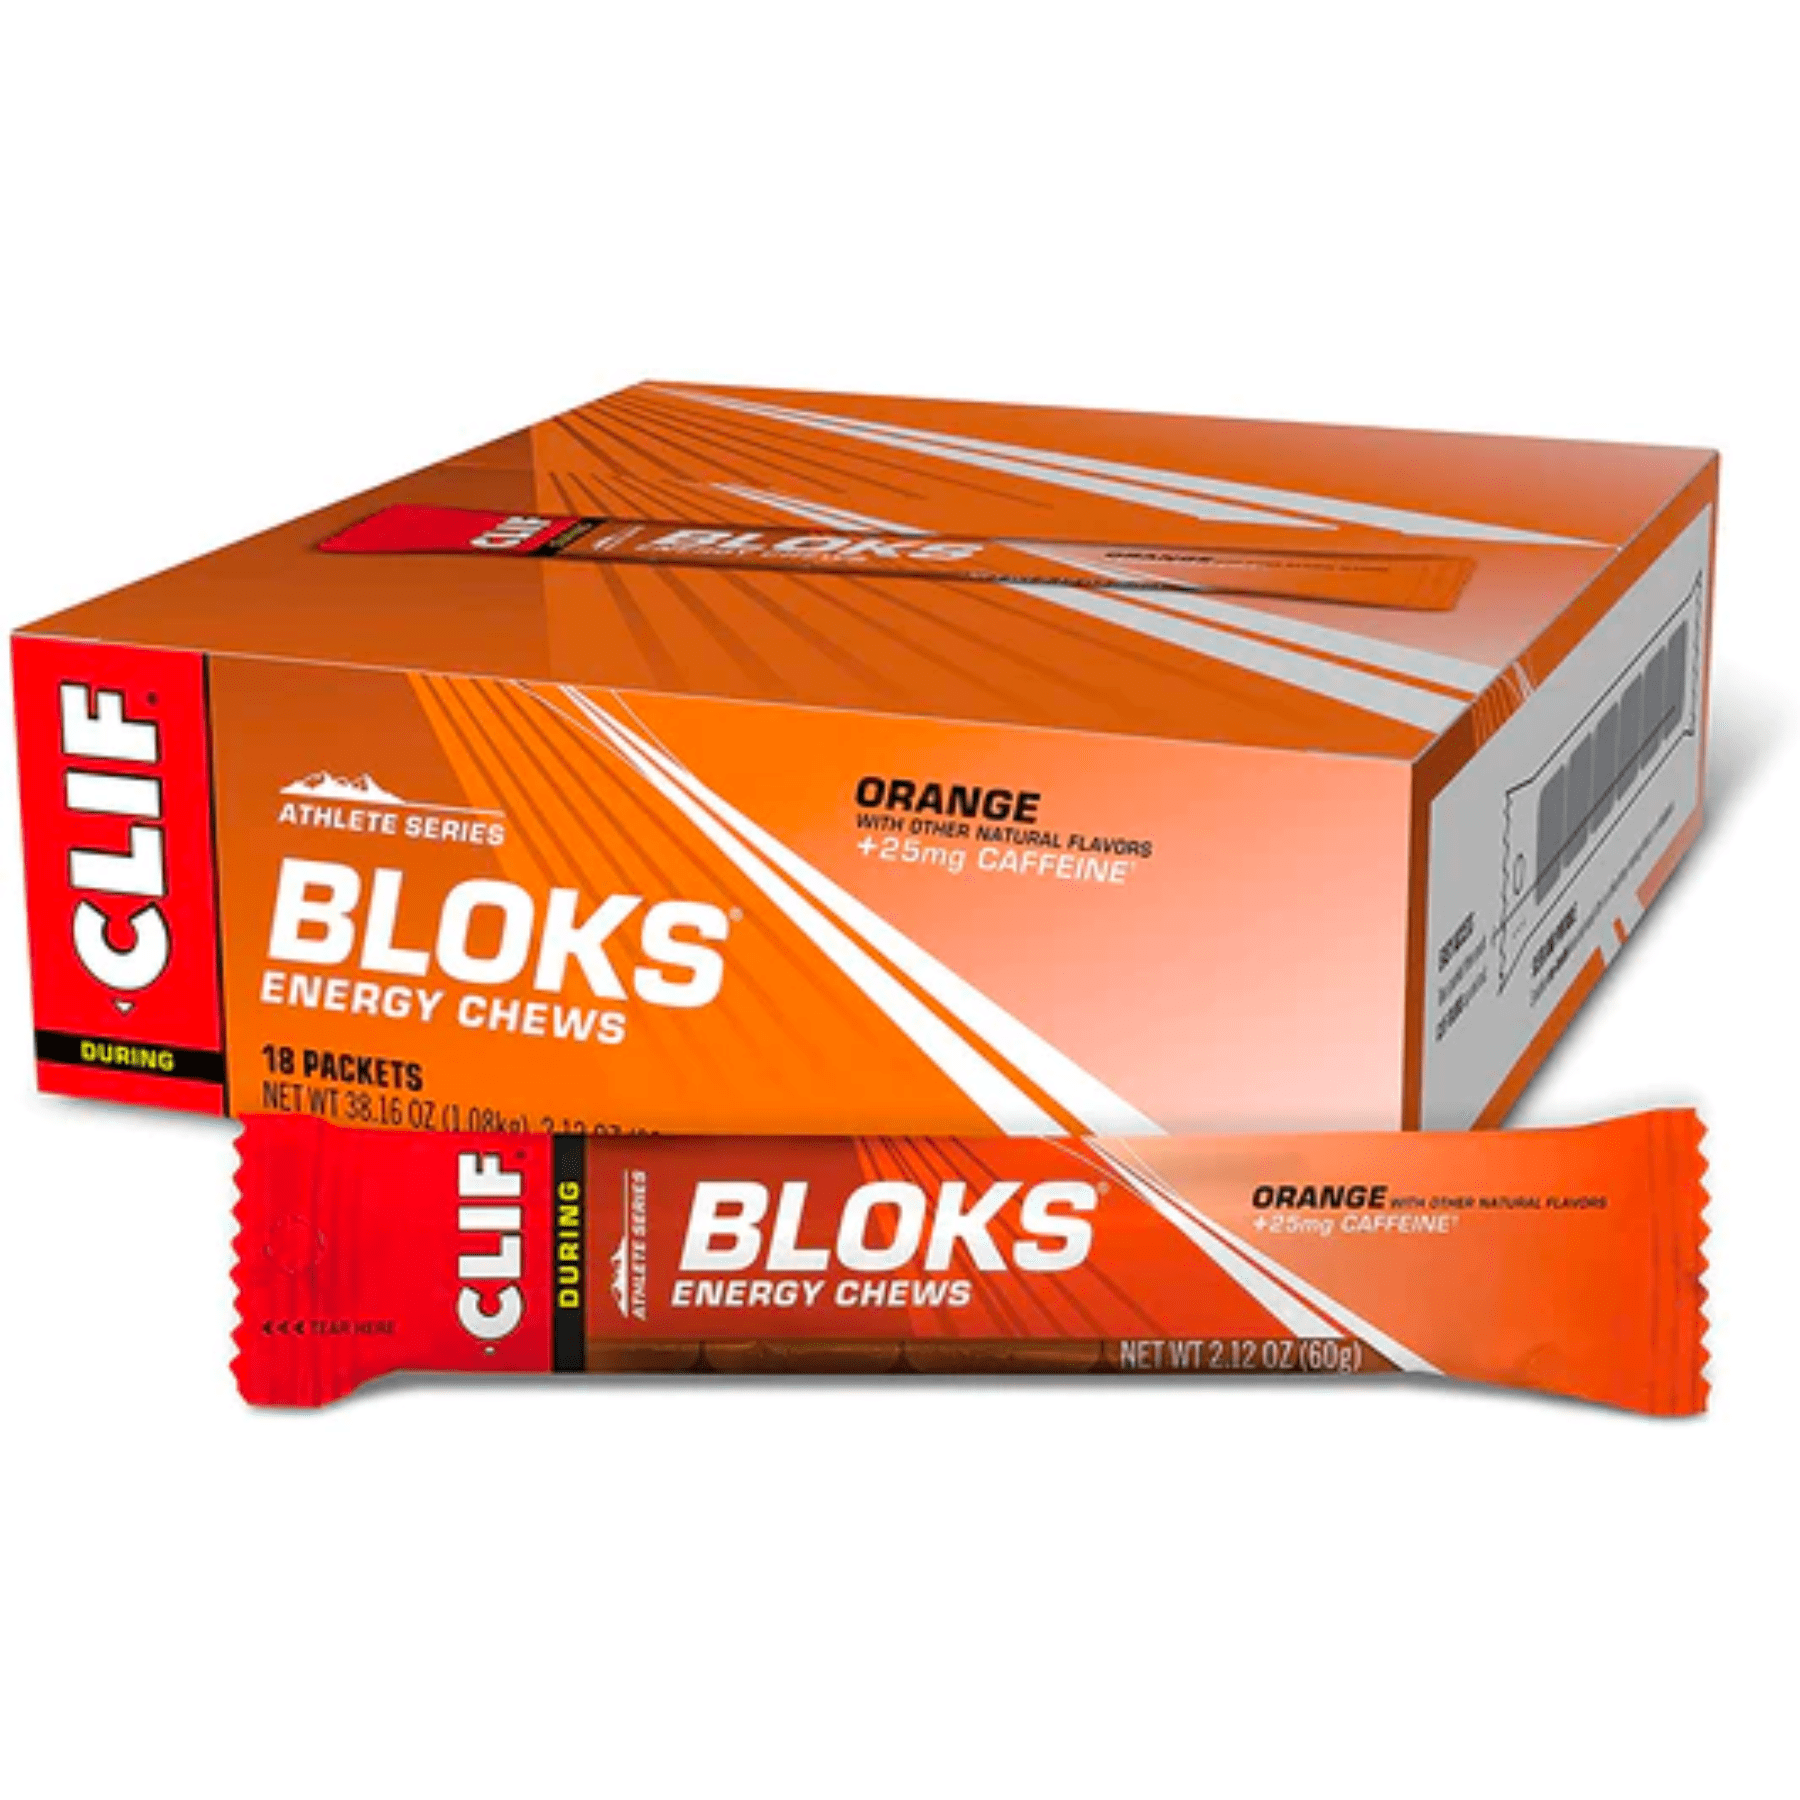 clif Energy Chews Box of 18 / Orange (25mg Caffeine) BLOKS Energy Chews CLIF52